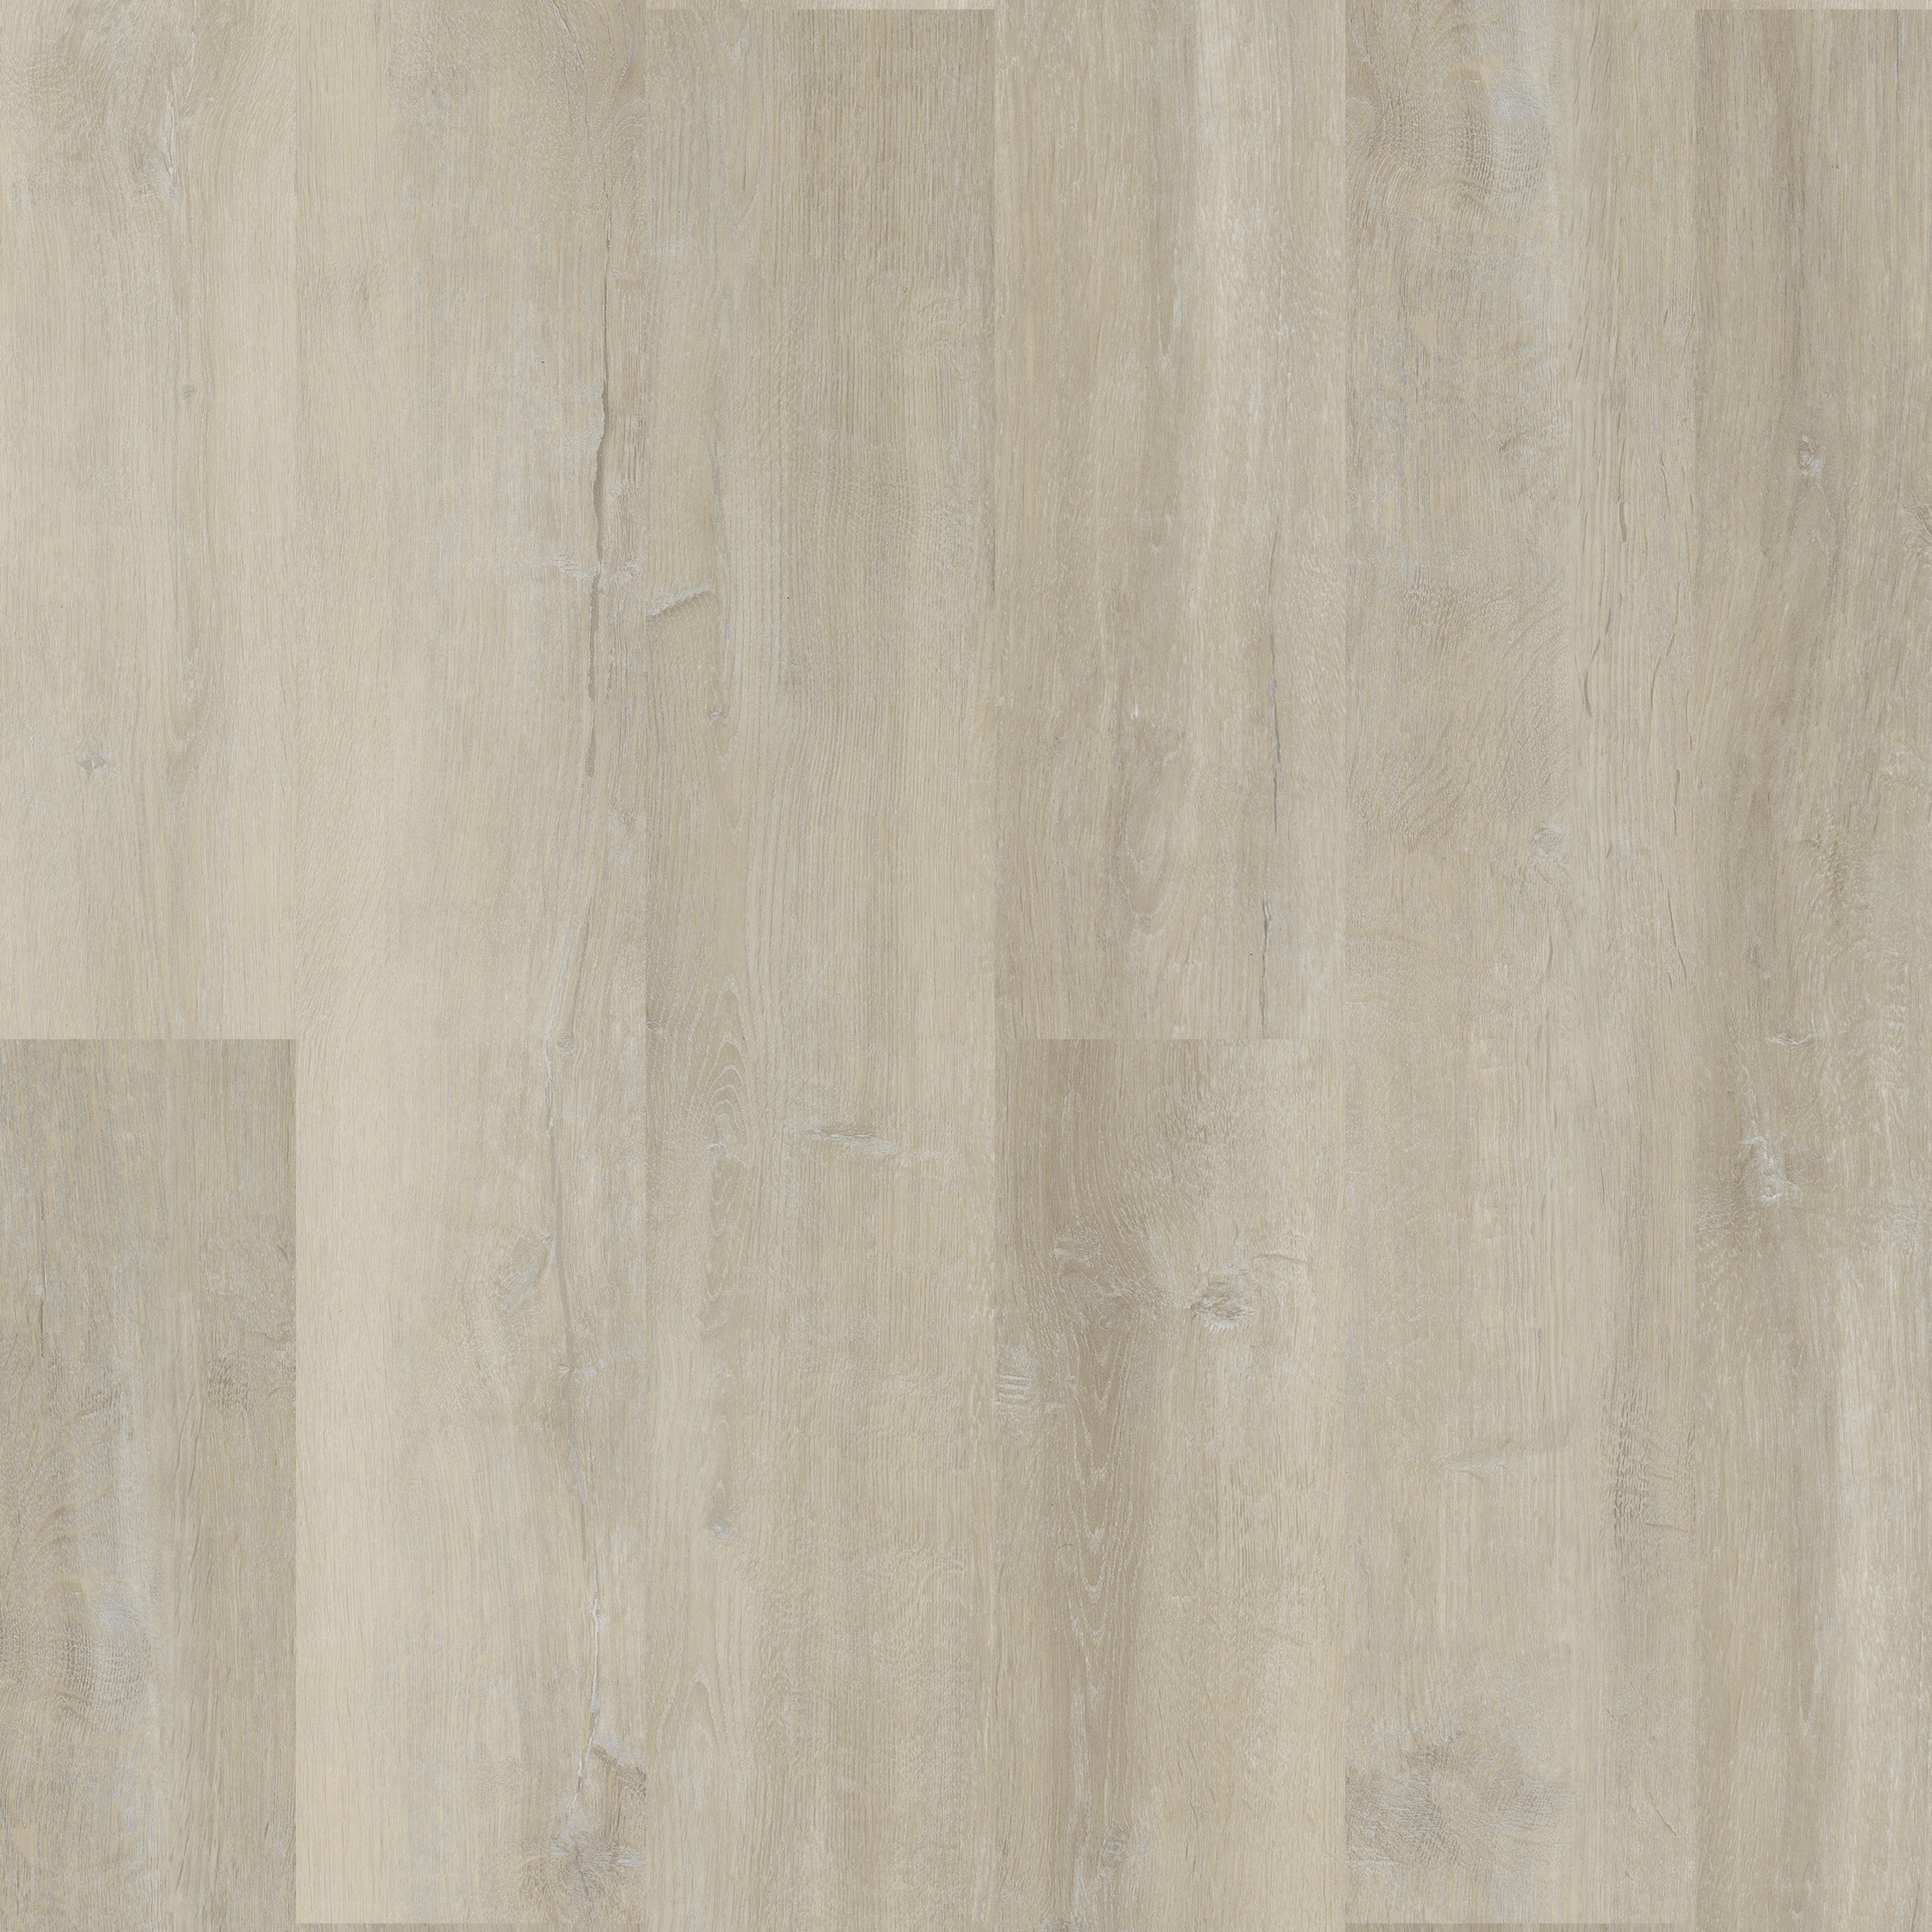 Image of Russam Limed Light Oak SPC Flooring with Integrated Underlay - 2.167m2